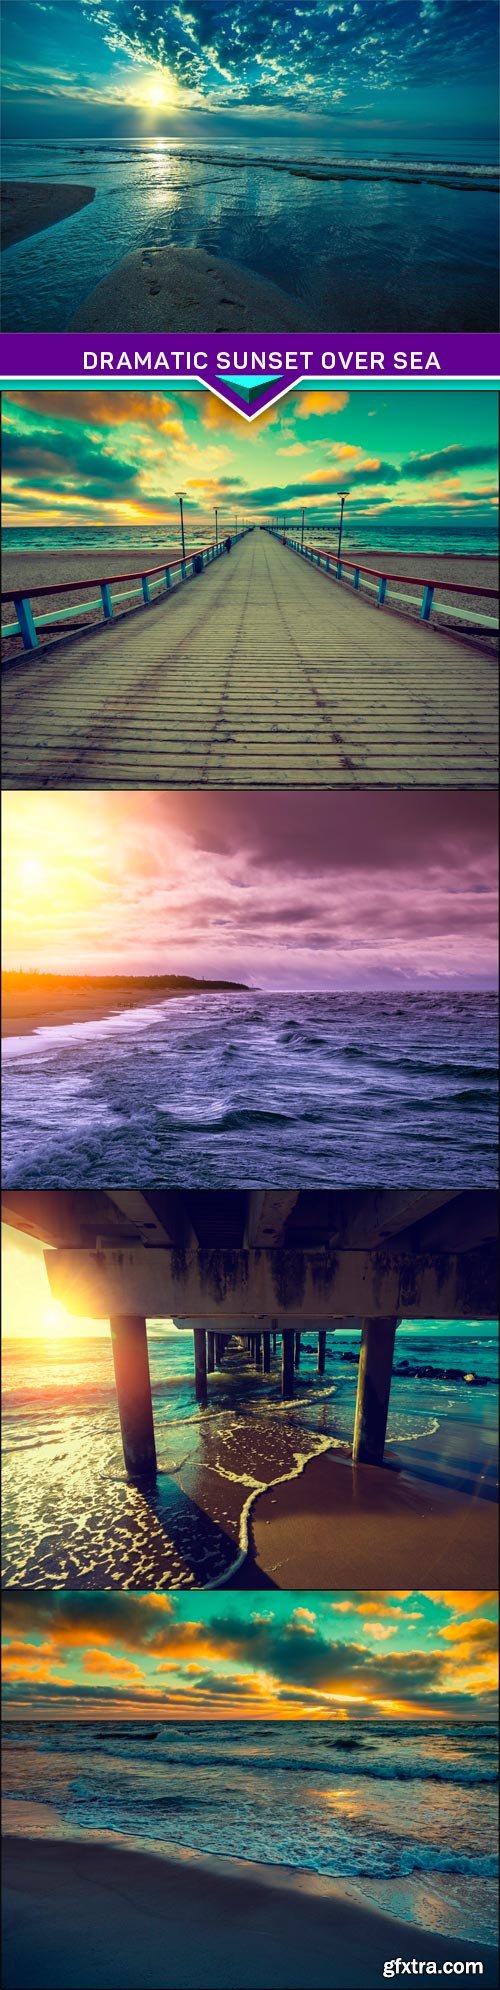 Dramatic sunset over sea 5X JPEG